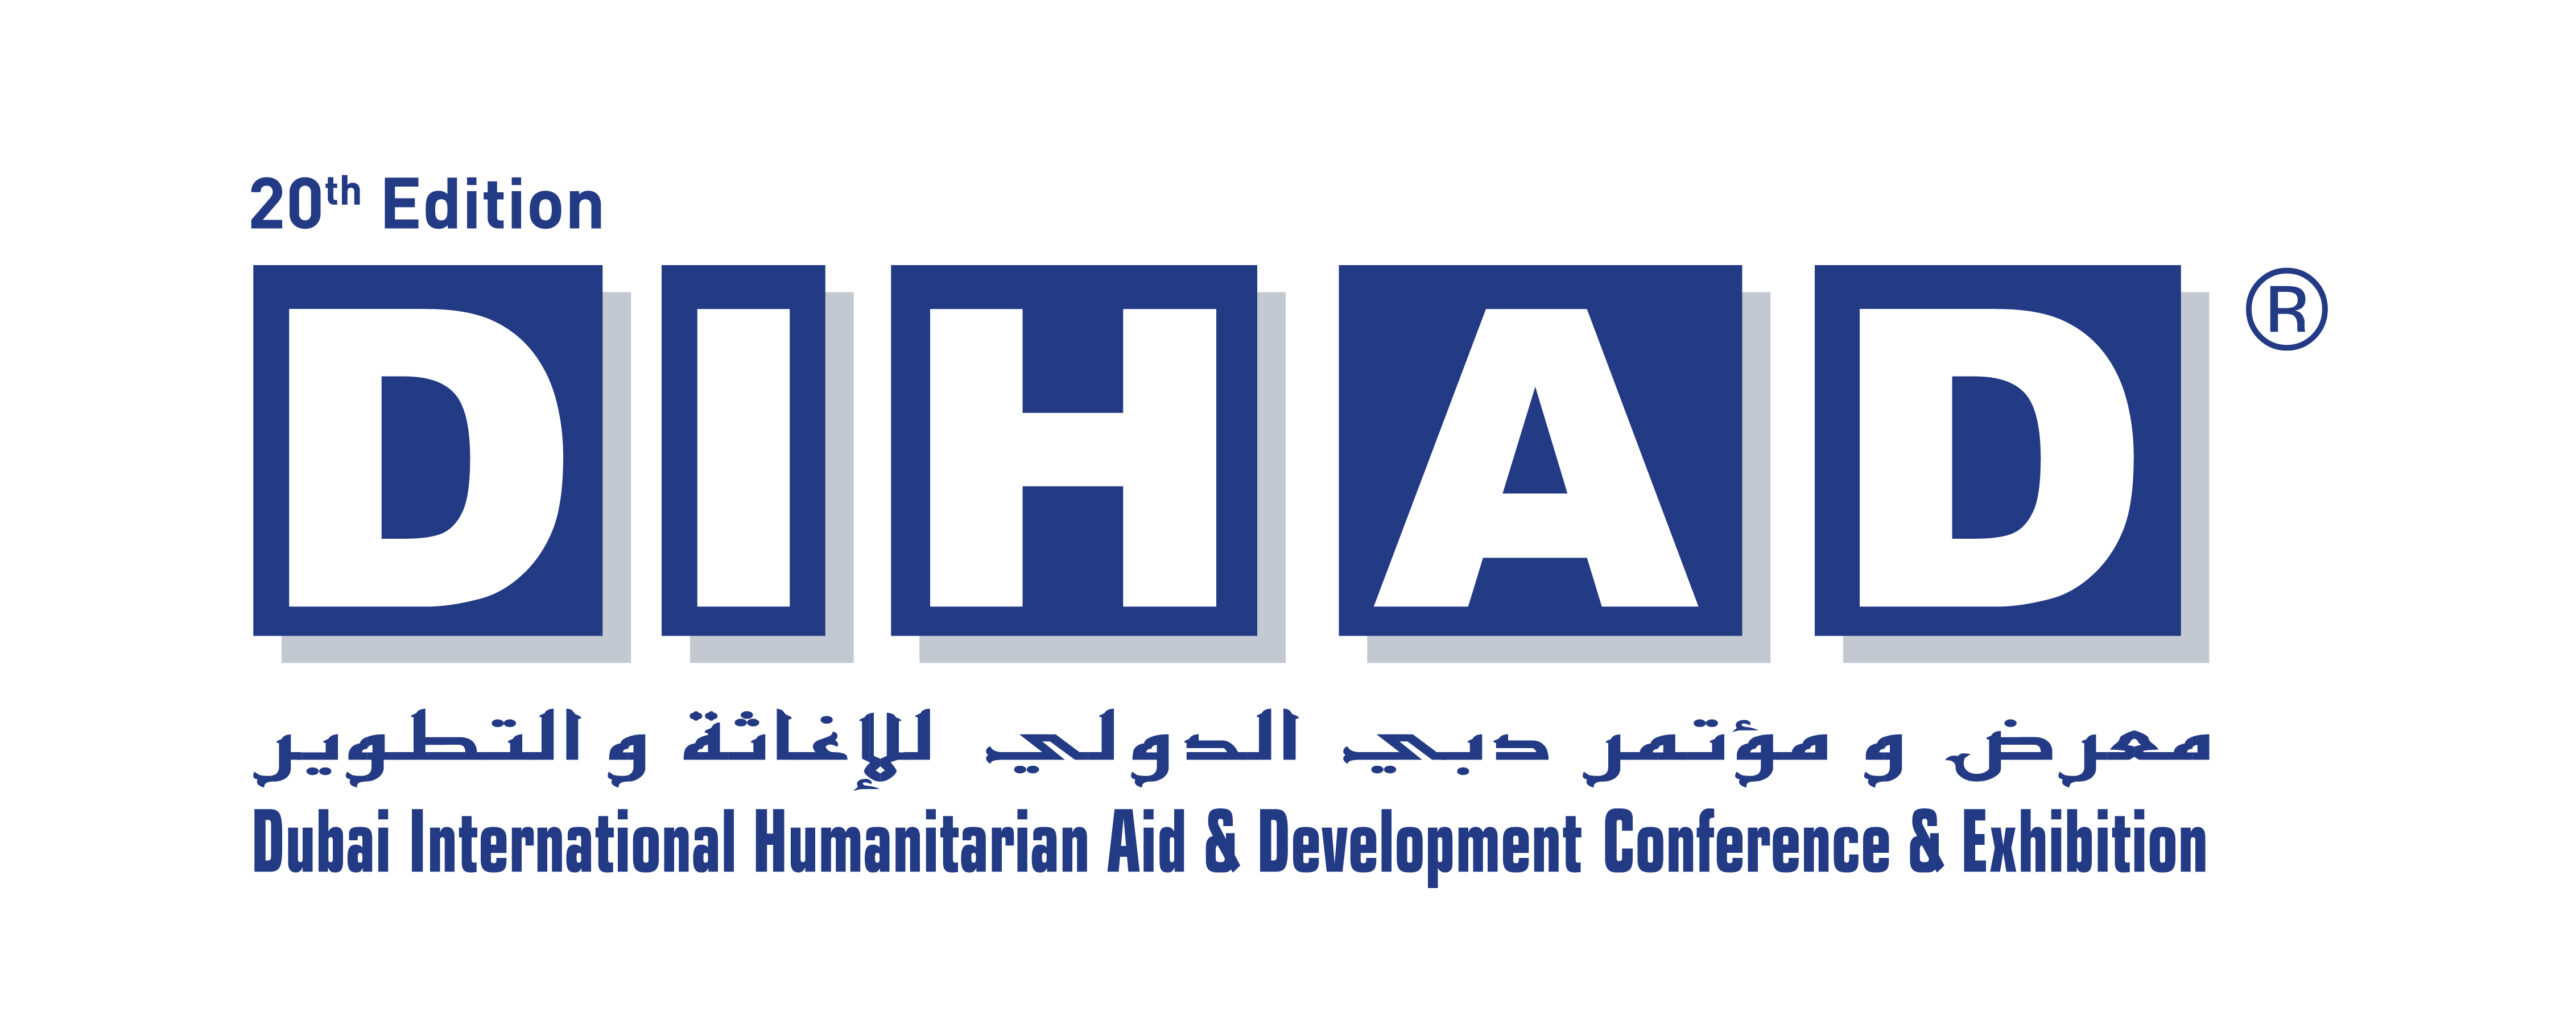 DIHAD Logo with edition 20 scaled- The NGO World Foundation